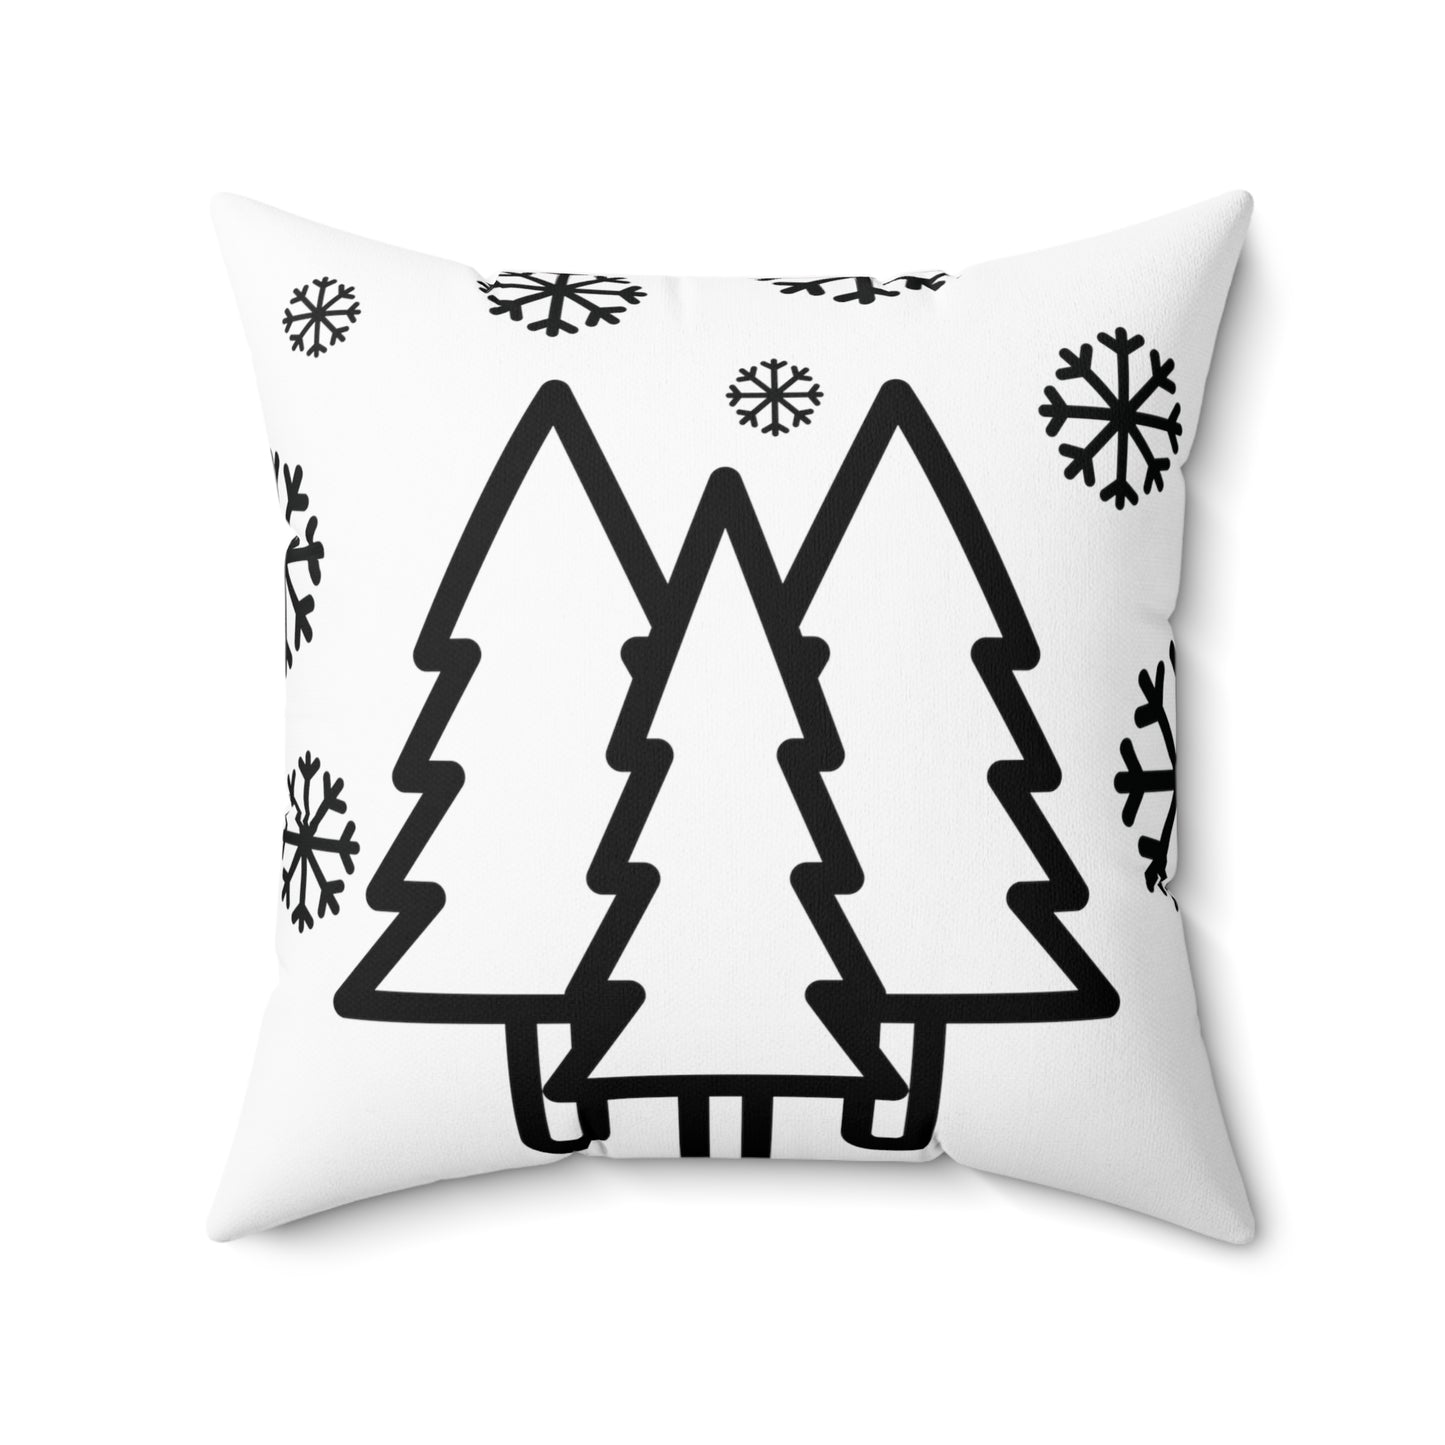 Merry Merry Merry Pillow: Spun Polyester Square Pillow